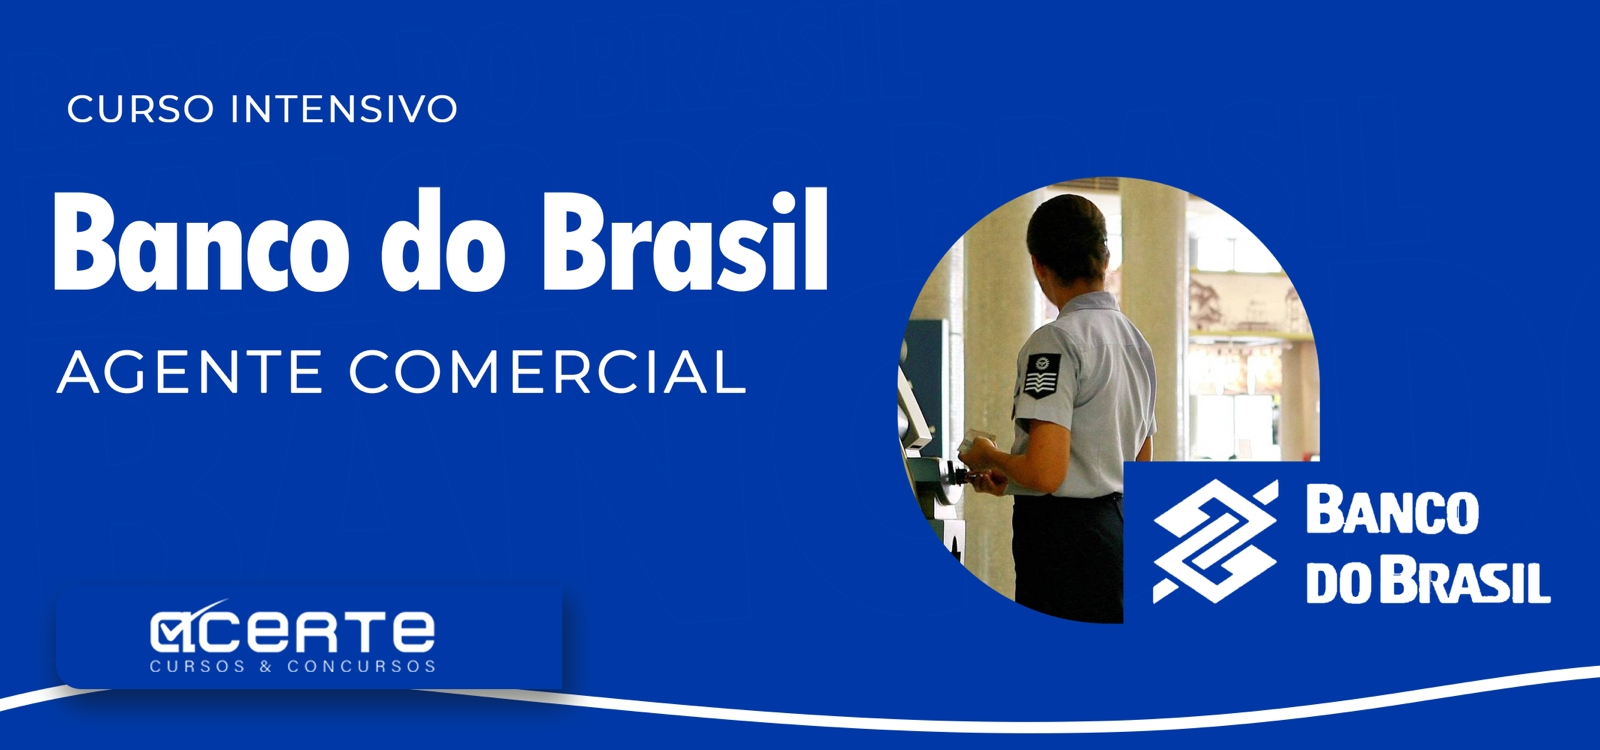 Banco do Brasil - Escriturário - Agente Comercial - PRESENCIAL - Edital Publicado